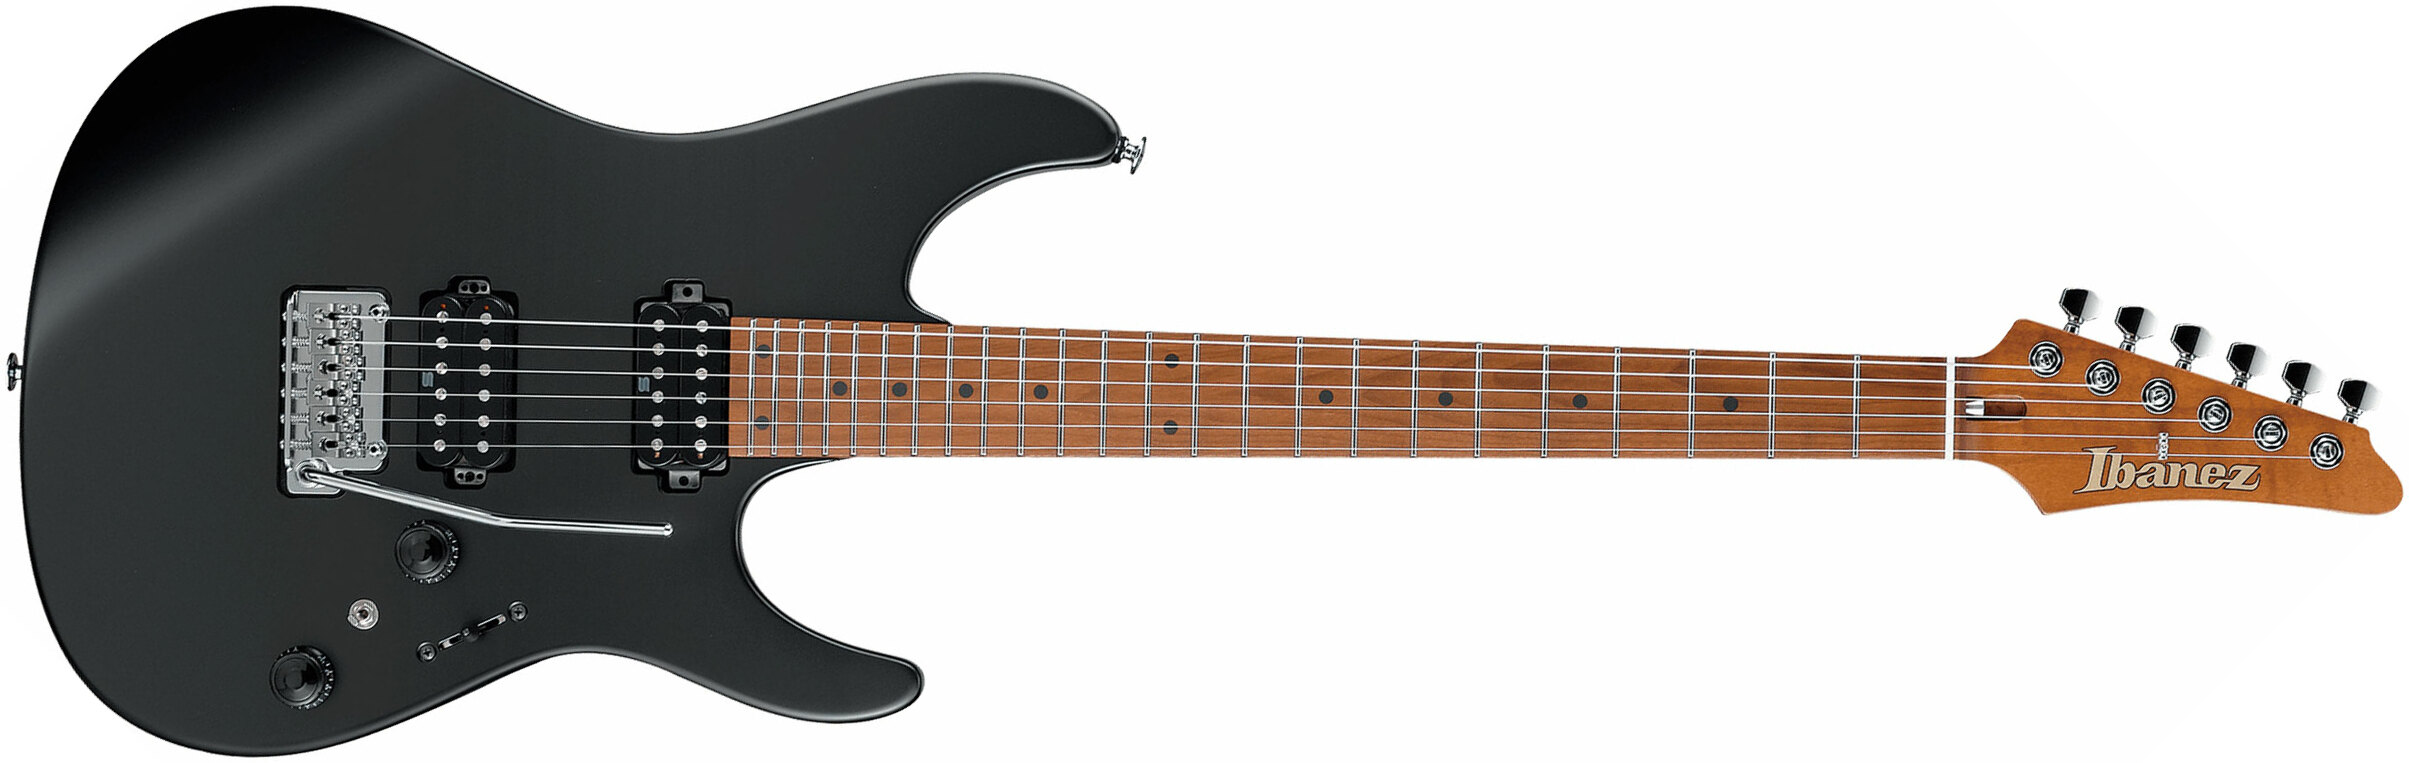 Ibanez Az2402 Bkf Prestige Jap Hh Seymour Duncan Trem Mn - Black Flat - Elektrische gitaar in Str-vorm - Main picture